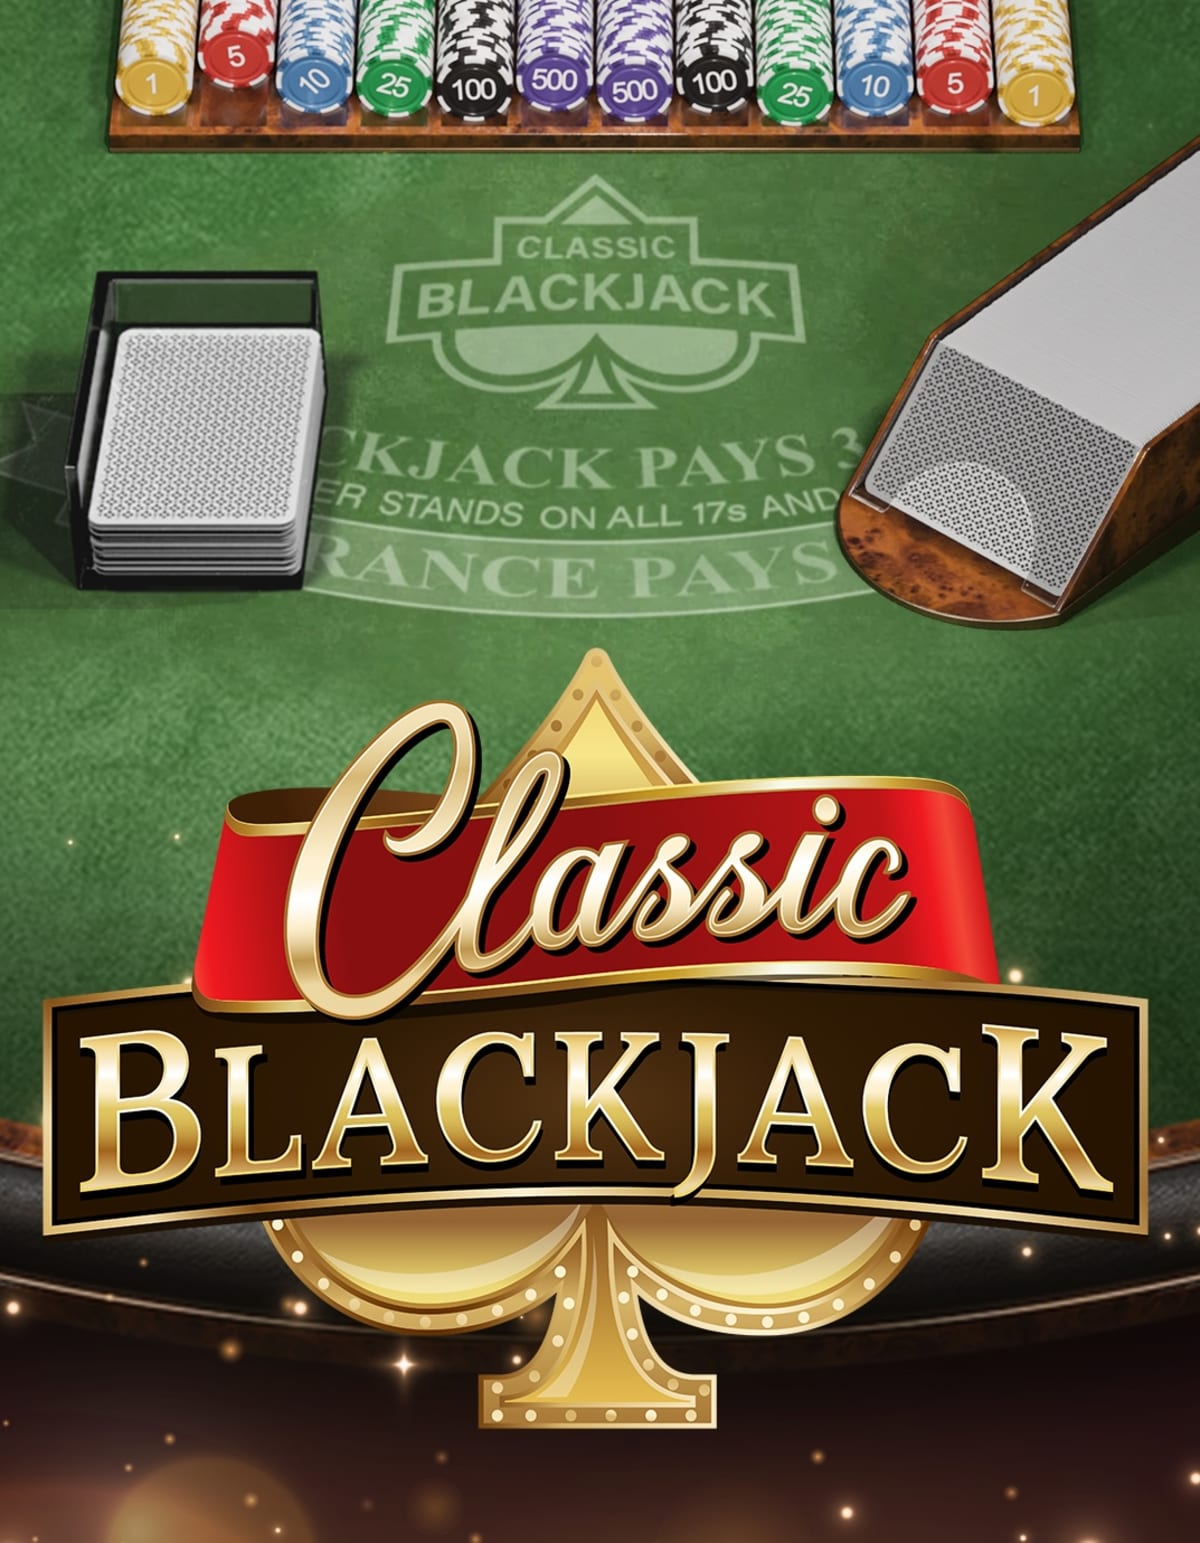 Blackjack Classic by Evolution